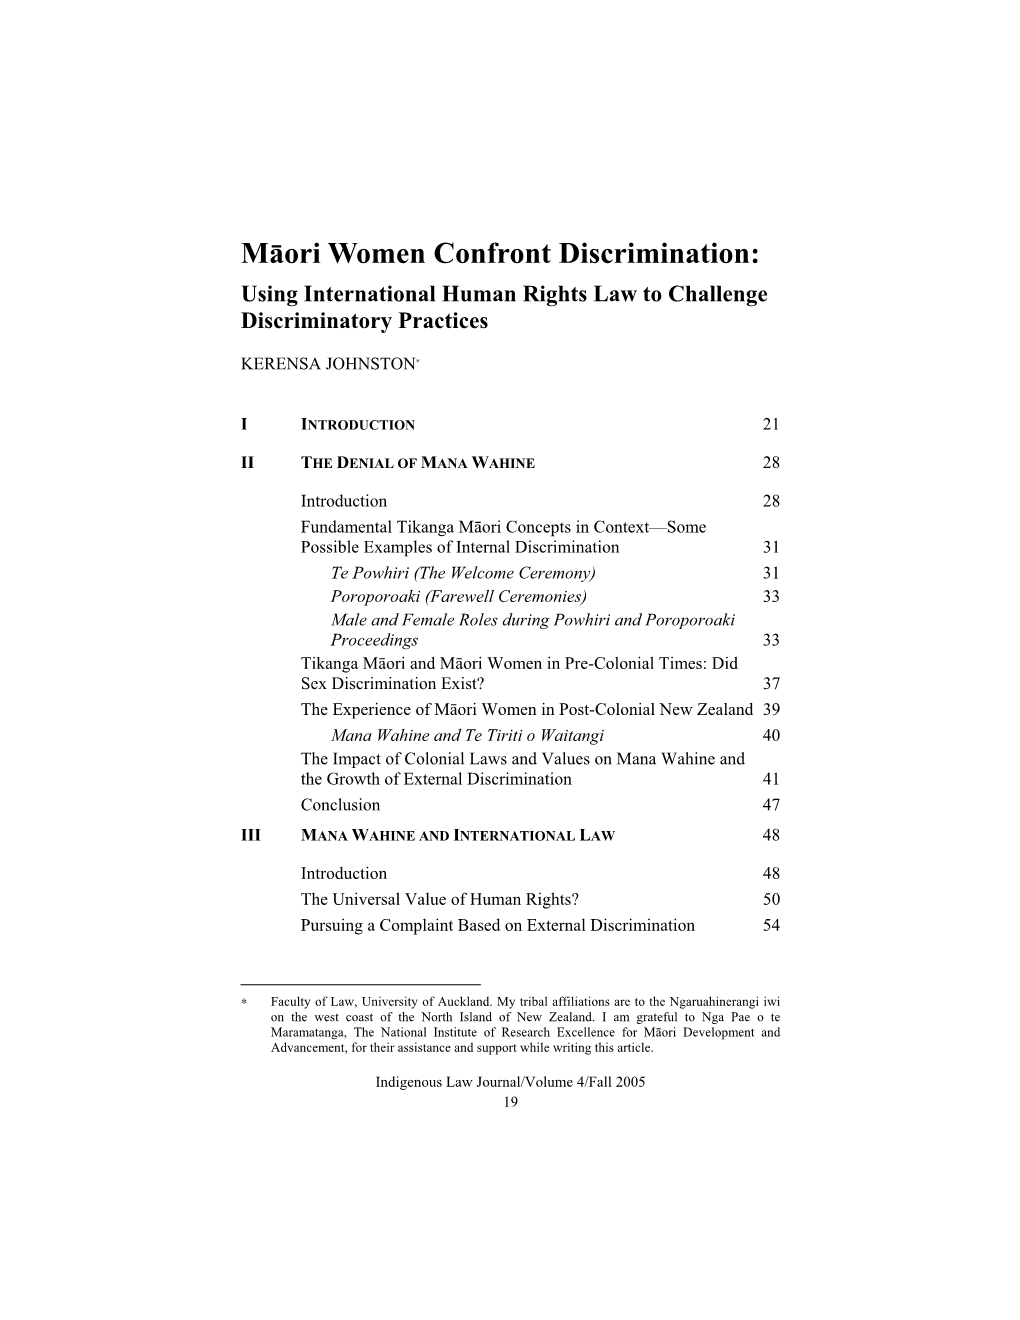 Mɨori Women Confront Discrimination: Using International Human Rights Law to Challenge Discriminatory Practices